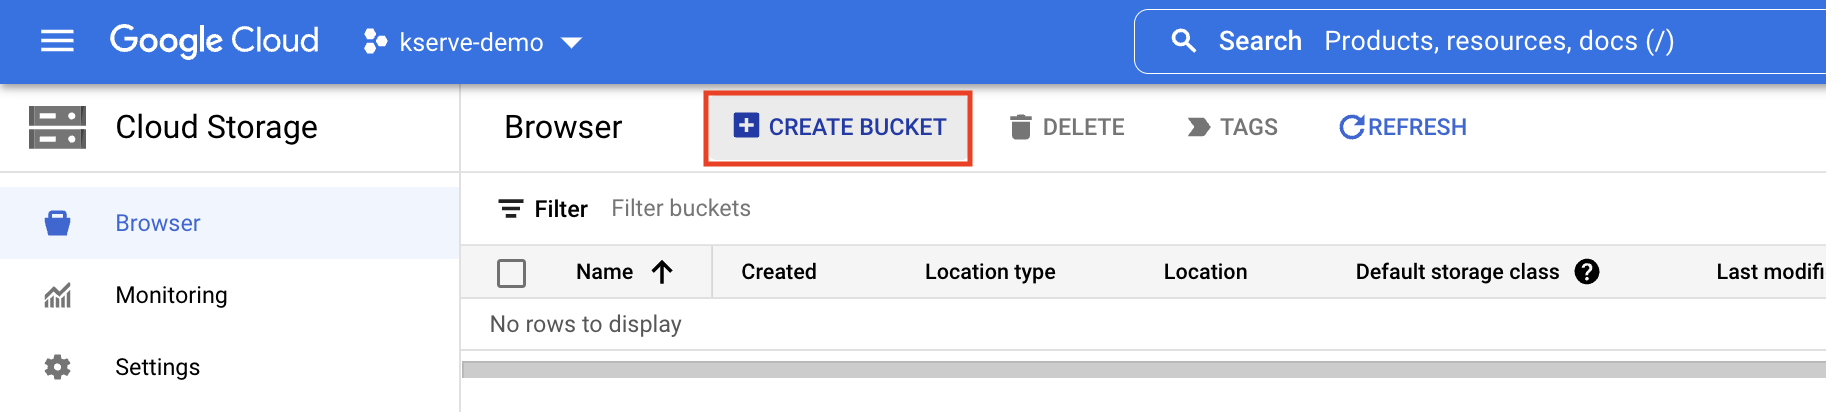 Create GS bucket